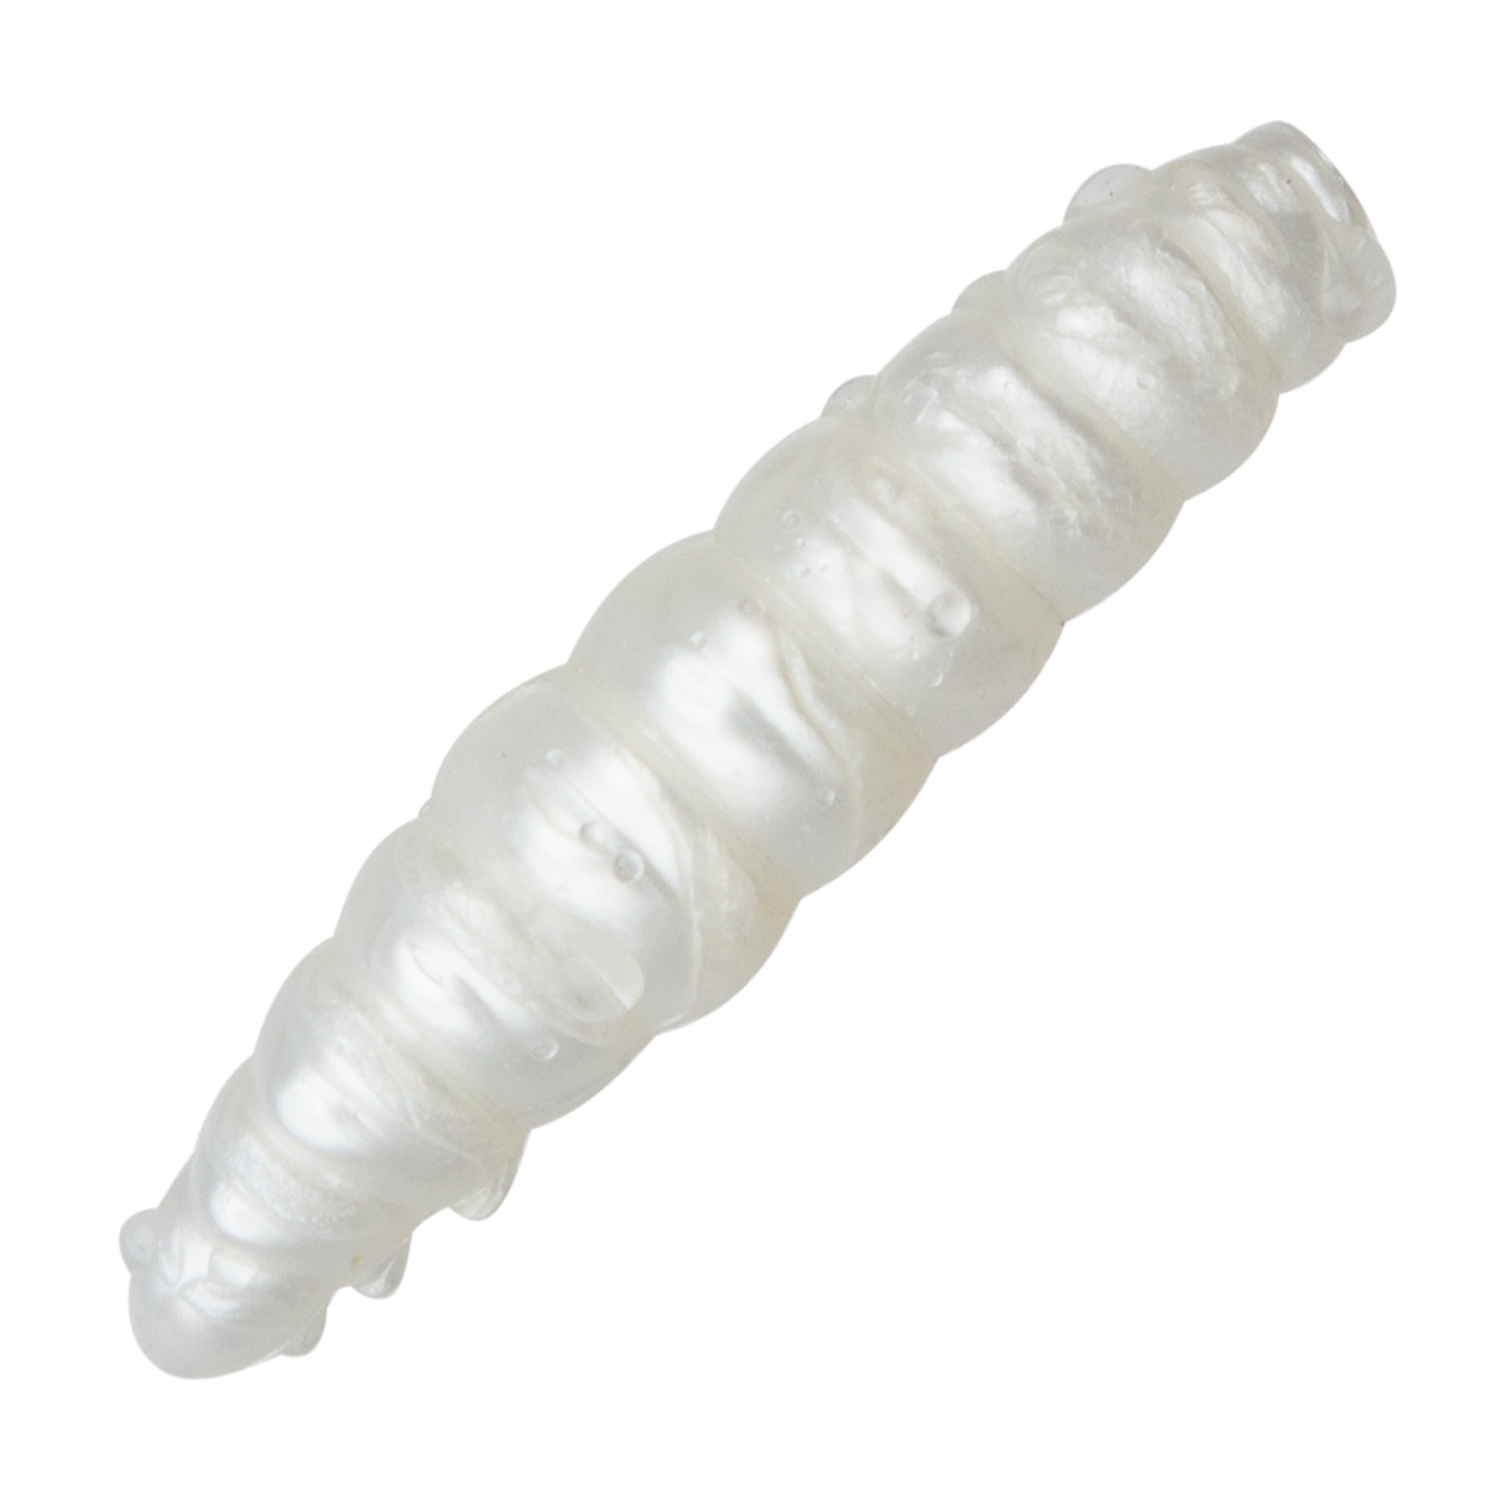 Приманка силиконовая Libra Lures Larva 35мм Cheese #004 Silver Pearl